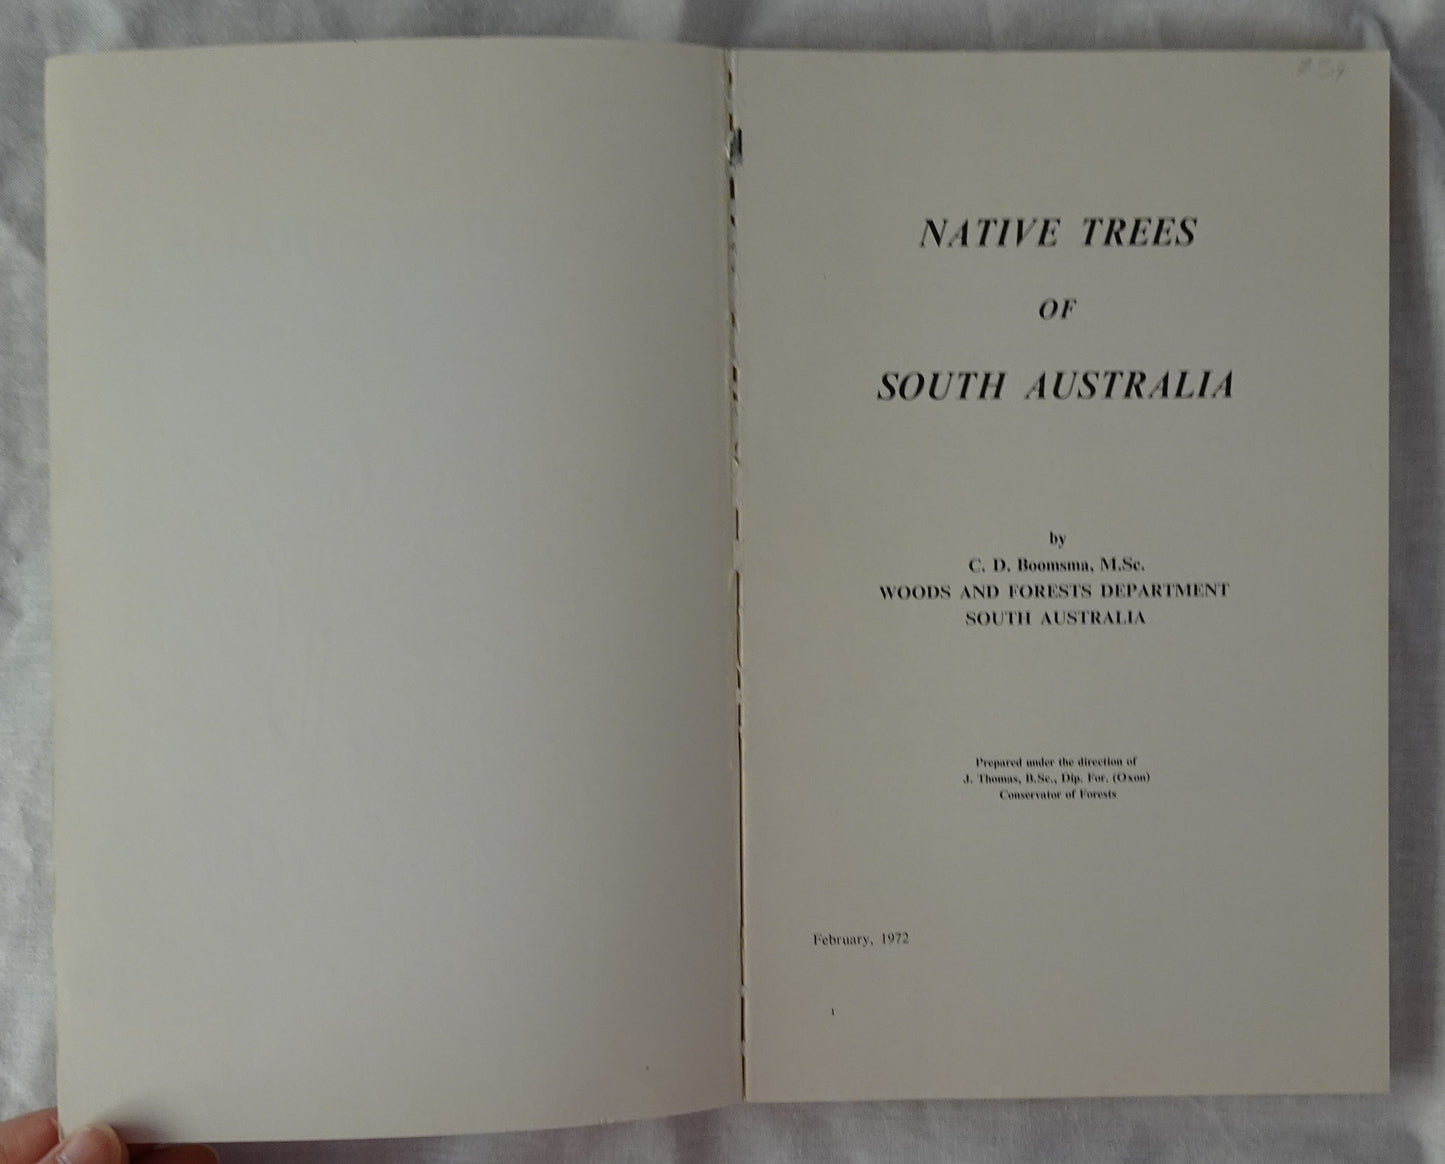 Native Trees of South Australia by C. D. Boomsma